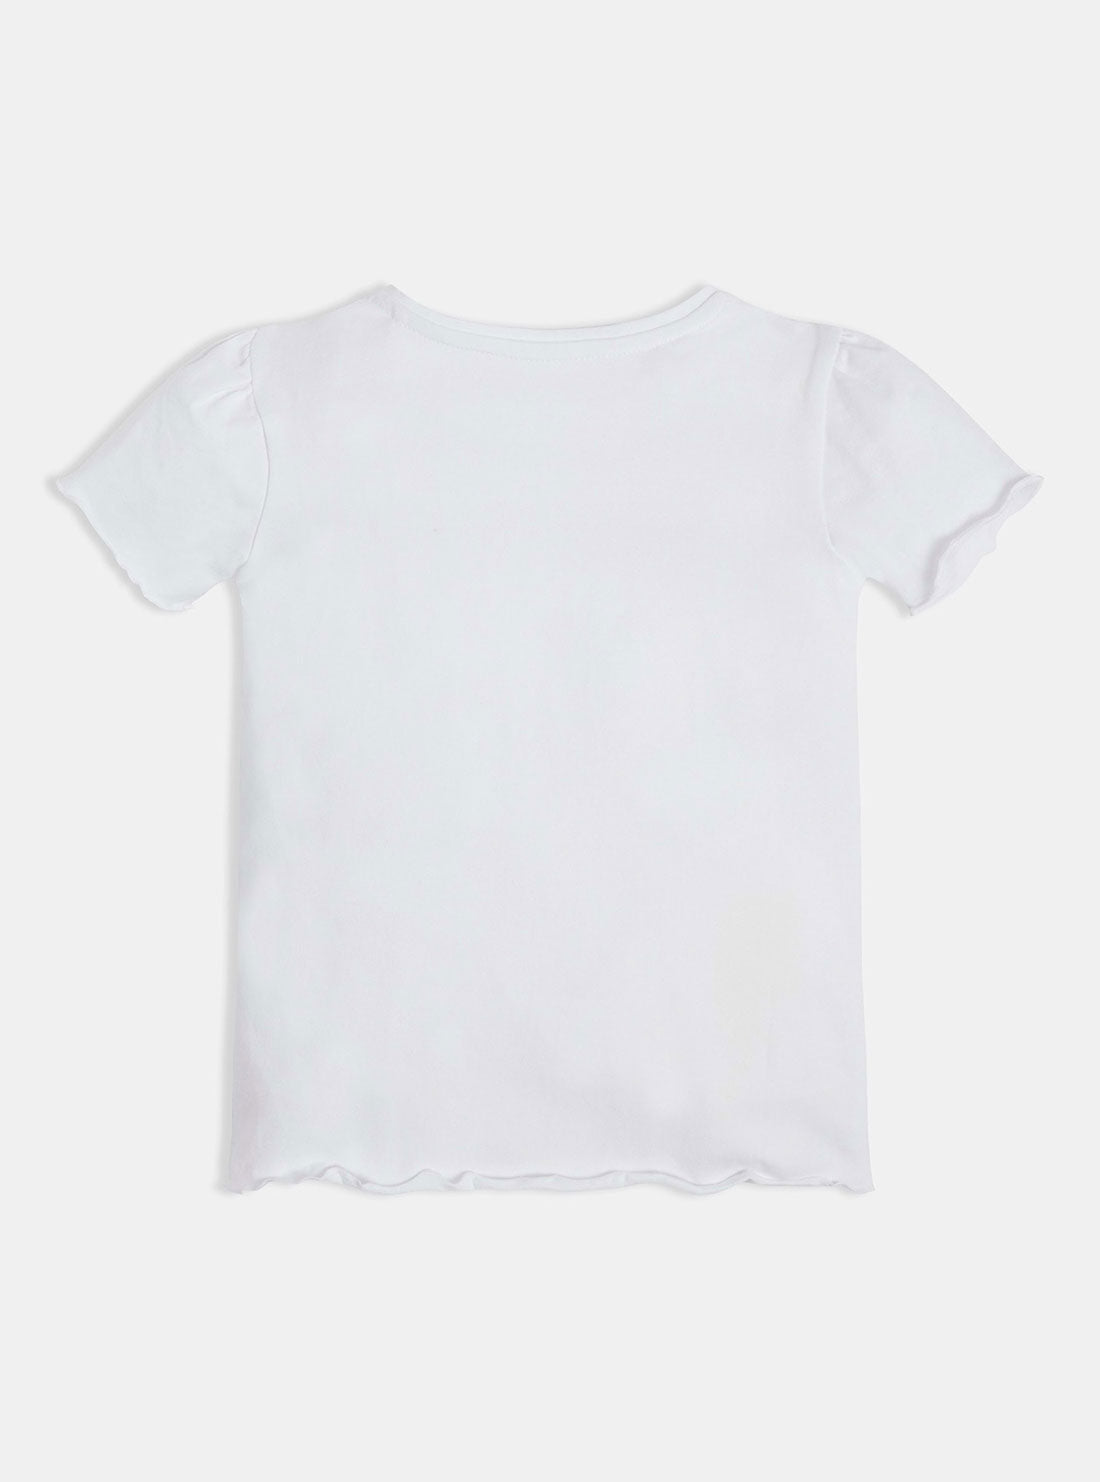 White Layered Triangle Logo T-Shirt | GUESS Kids | Back view